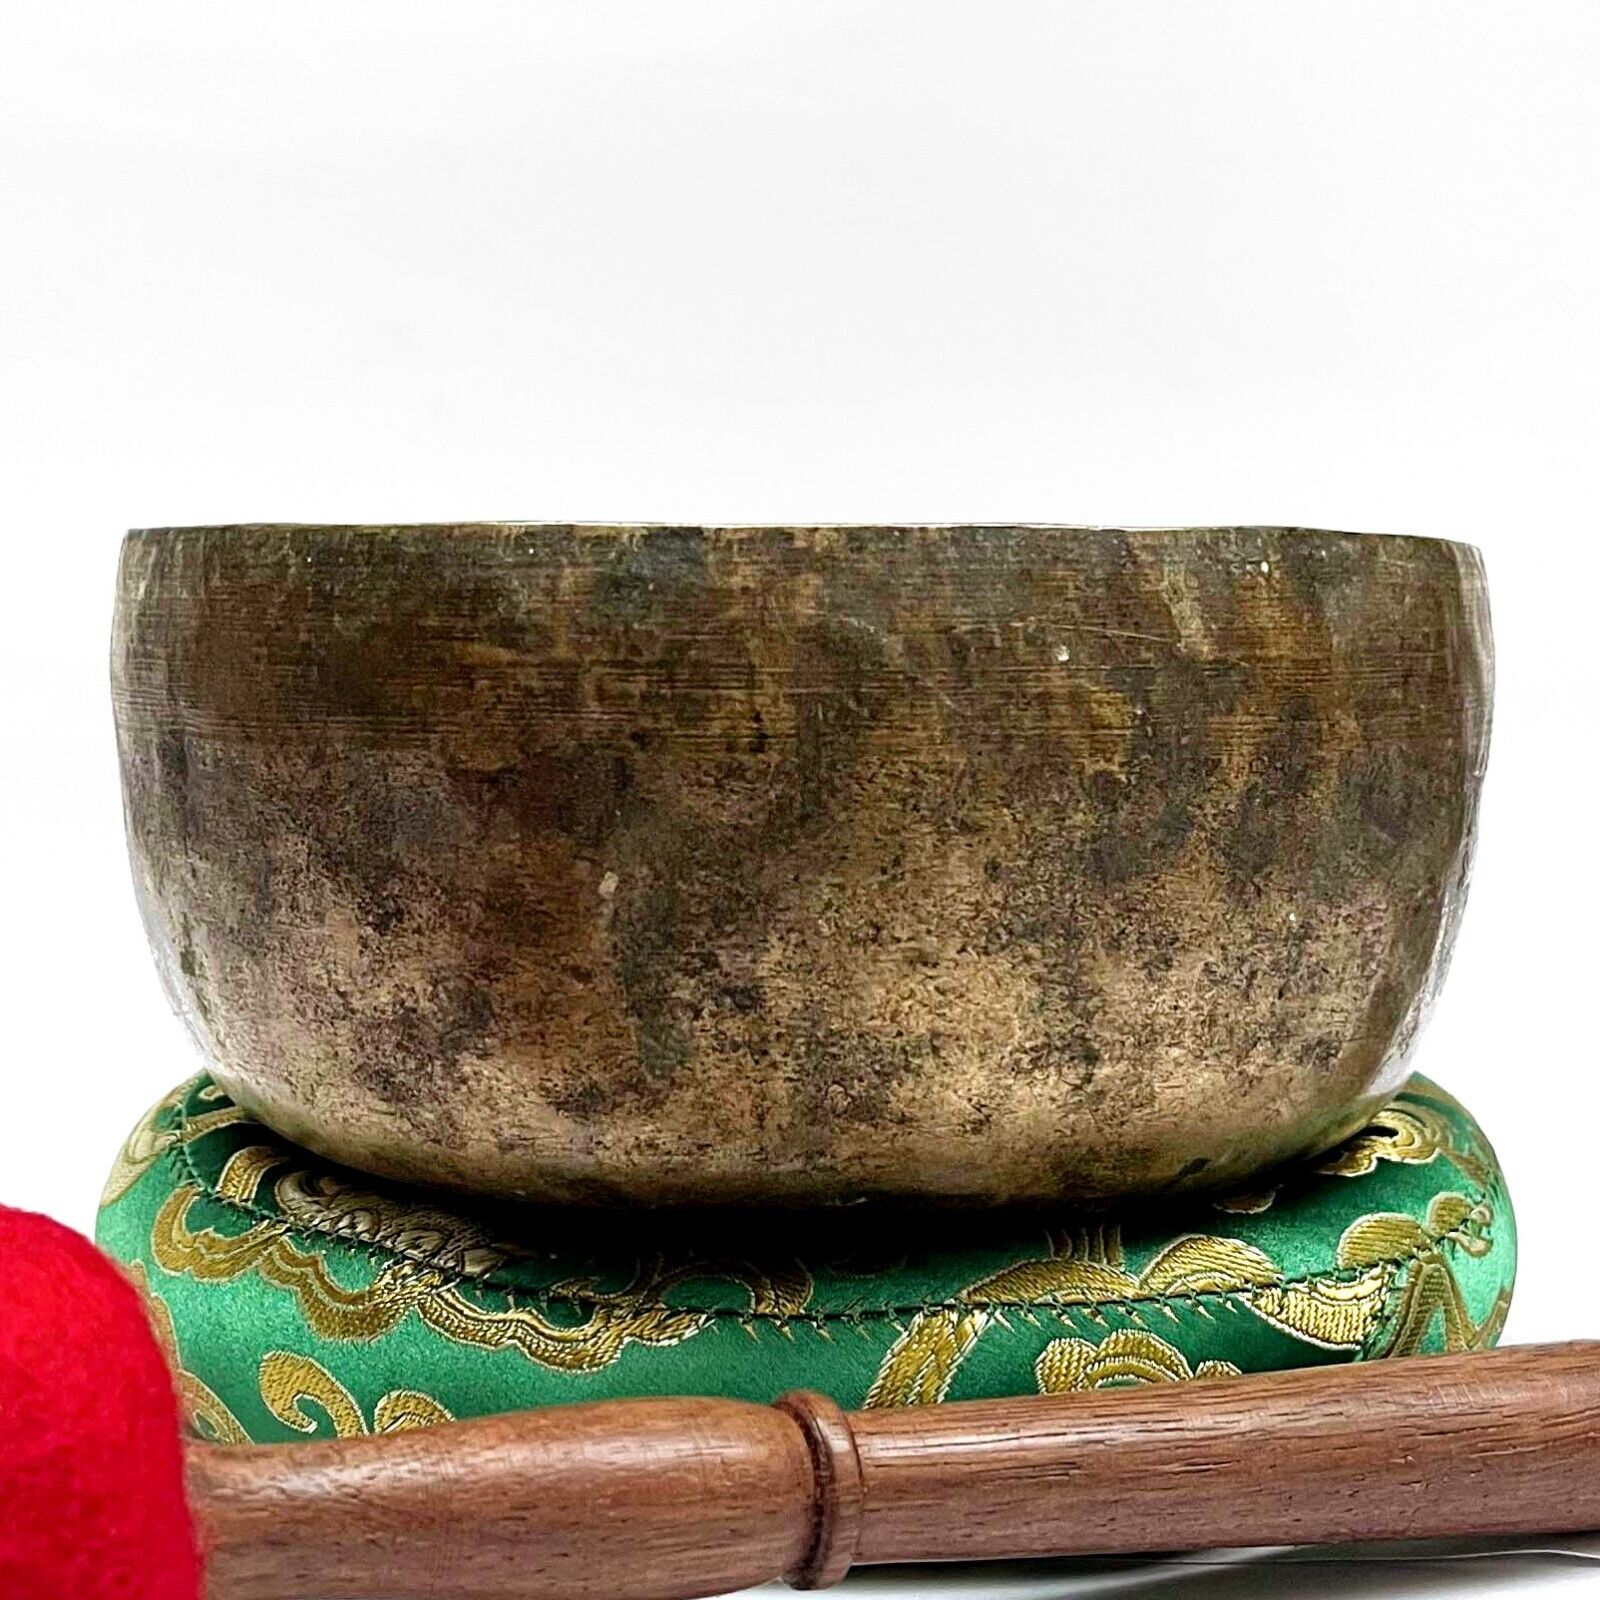 40 Years old Meditation Antique Yoga Singing Bowl Buddhist Tibetan Vintage Nepal